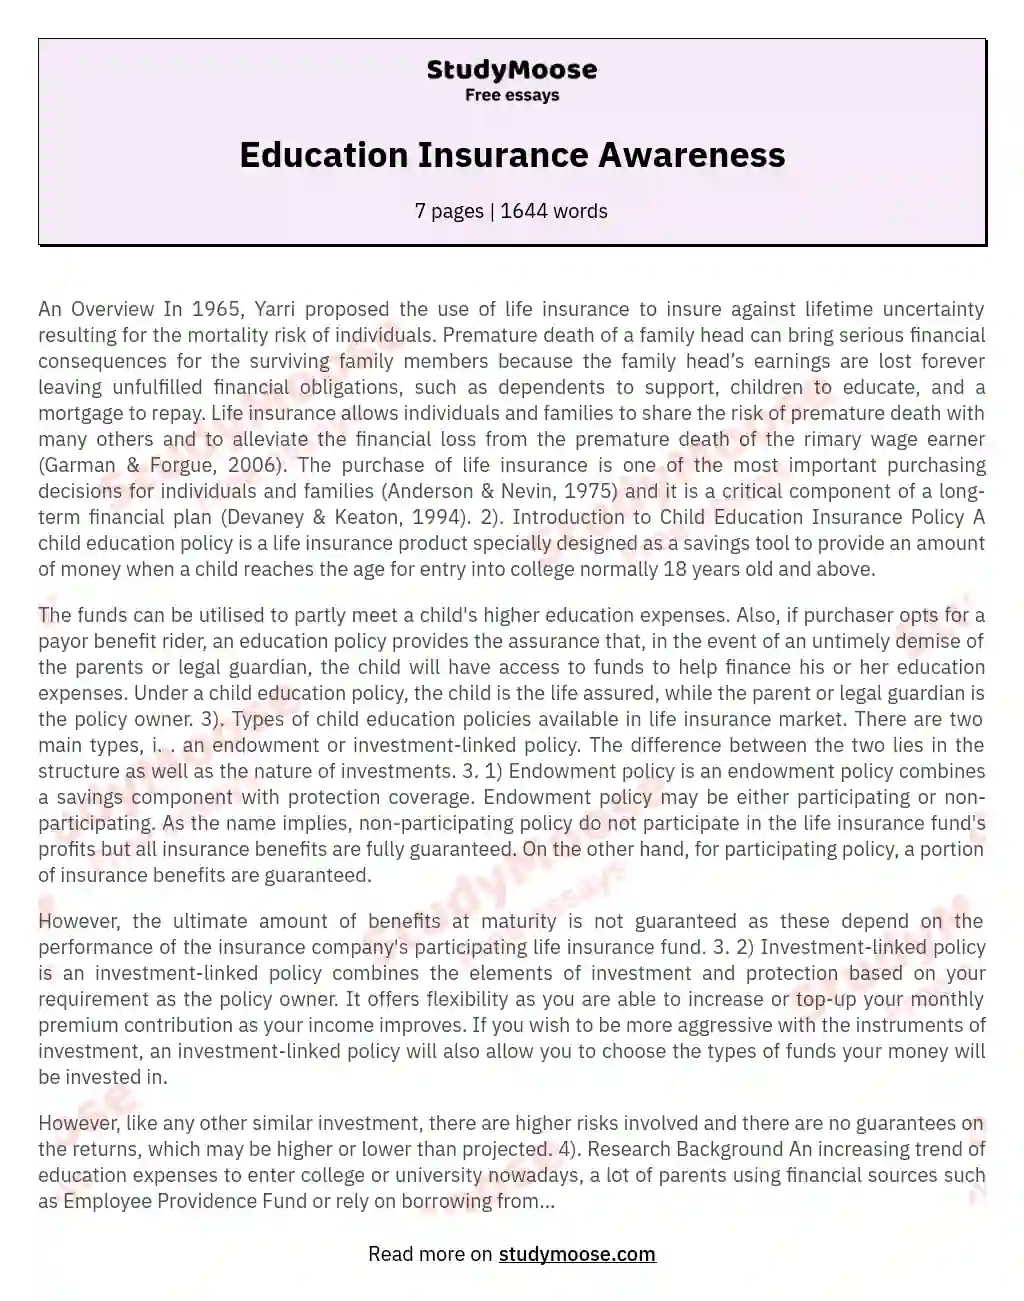 Education Insurance Awareness essay